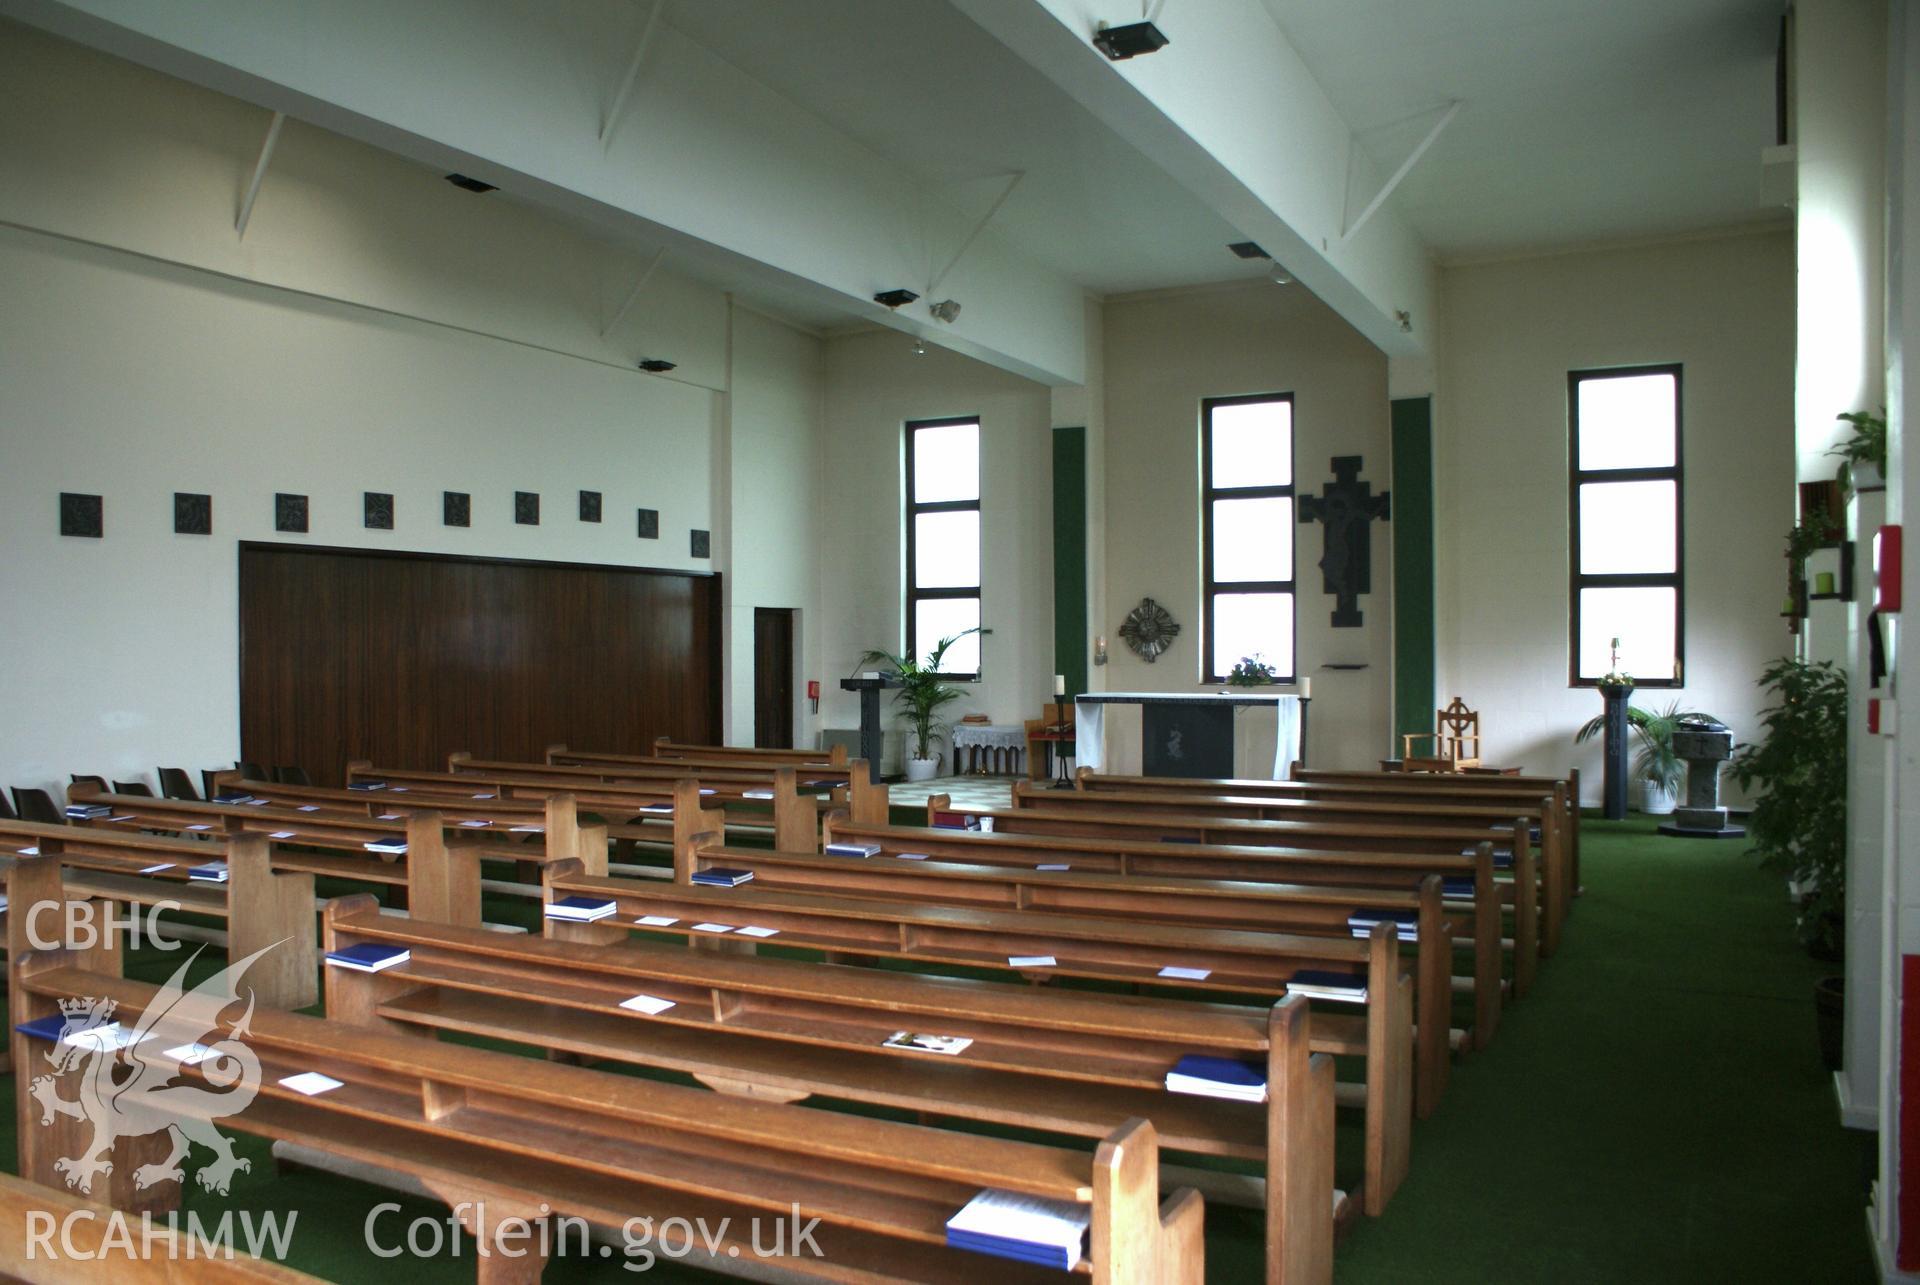 Digital colour photograph showing interior of St Joseph's Catholic church, Pwllheli.